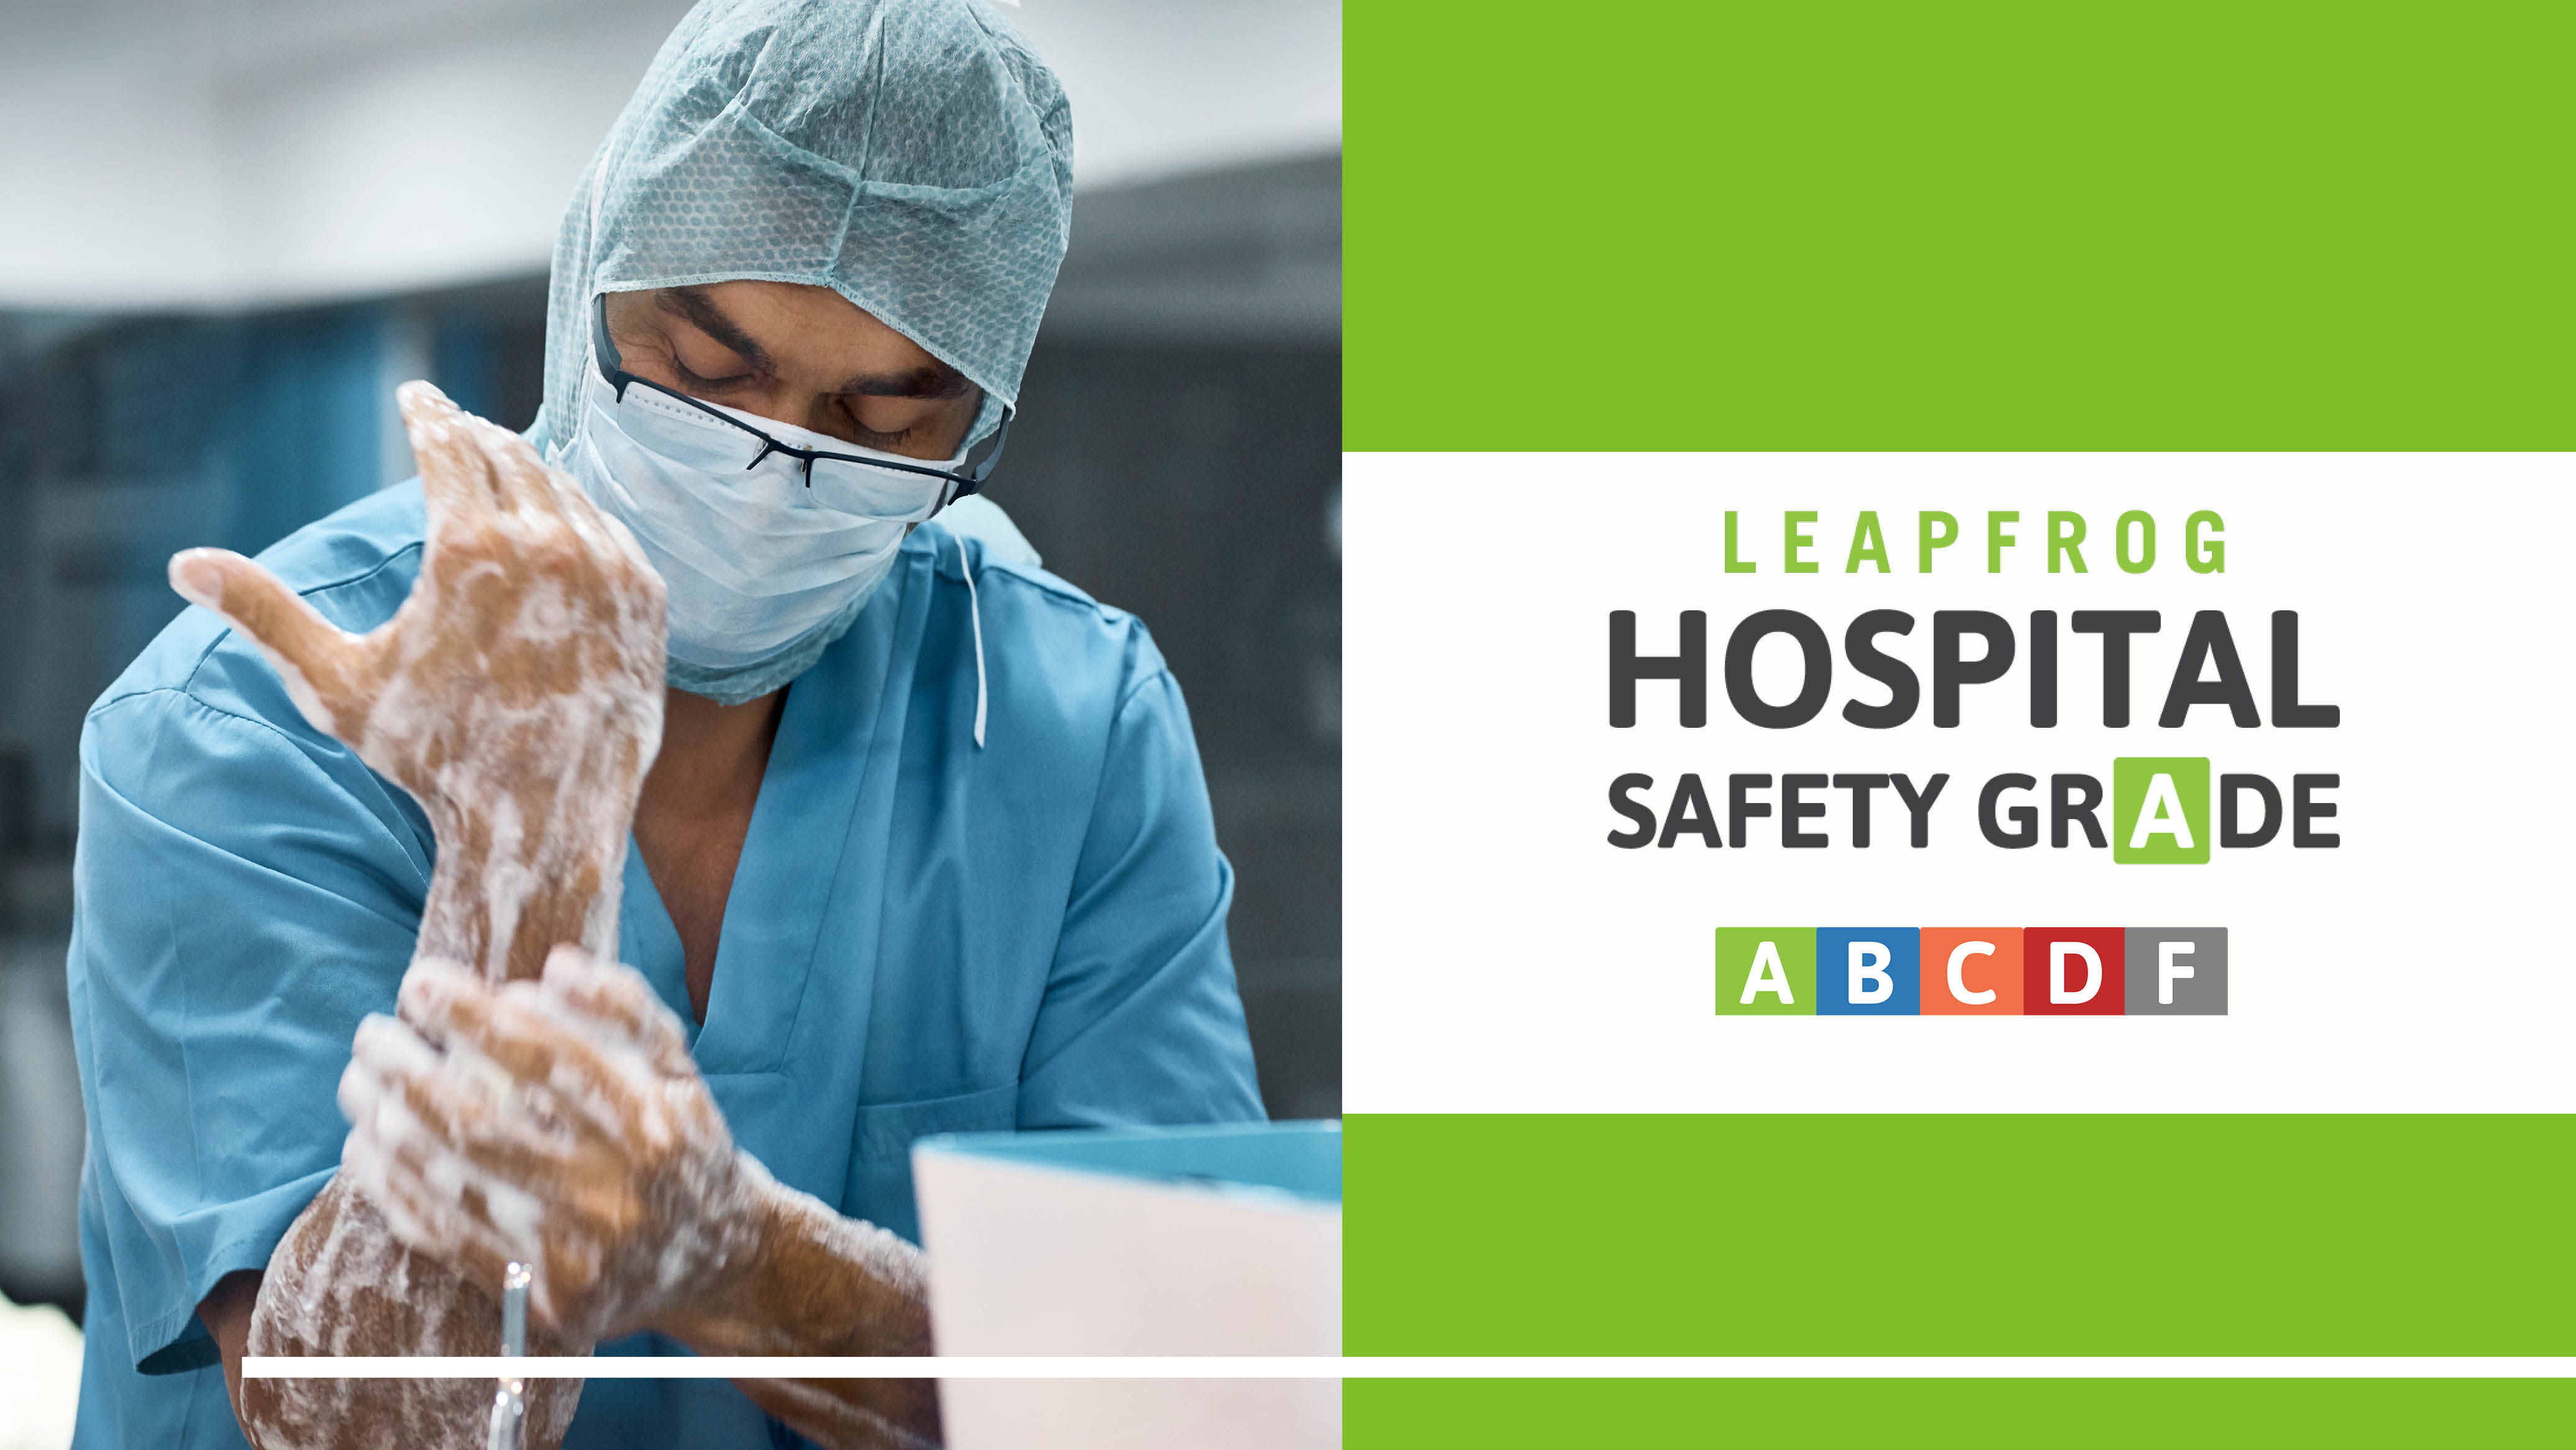 Leapfrog Hospital Safety Grades Highlight Safety Fundamentals Needed to